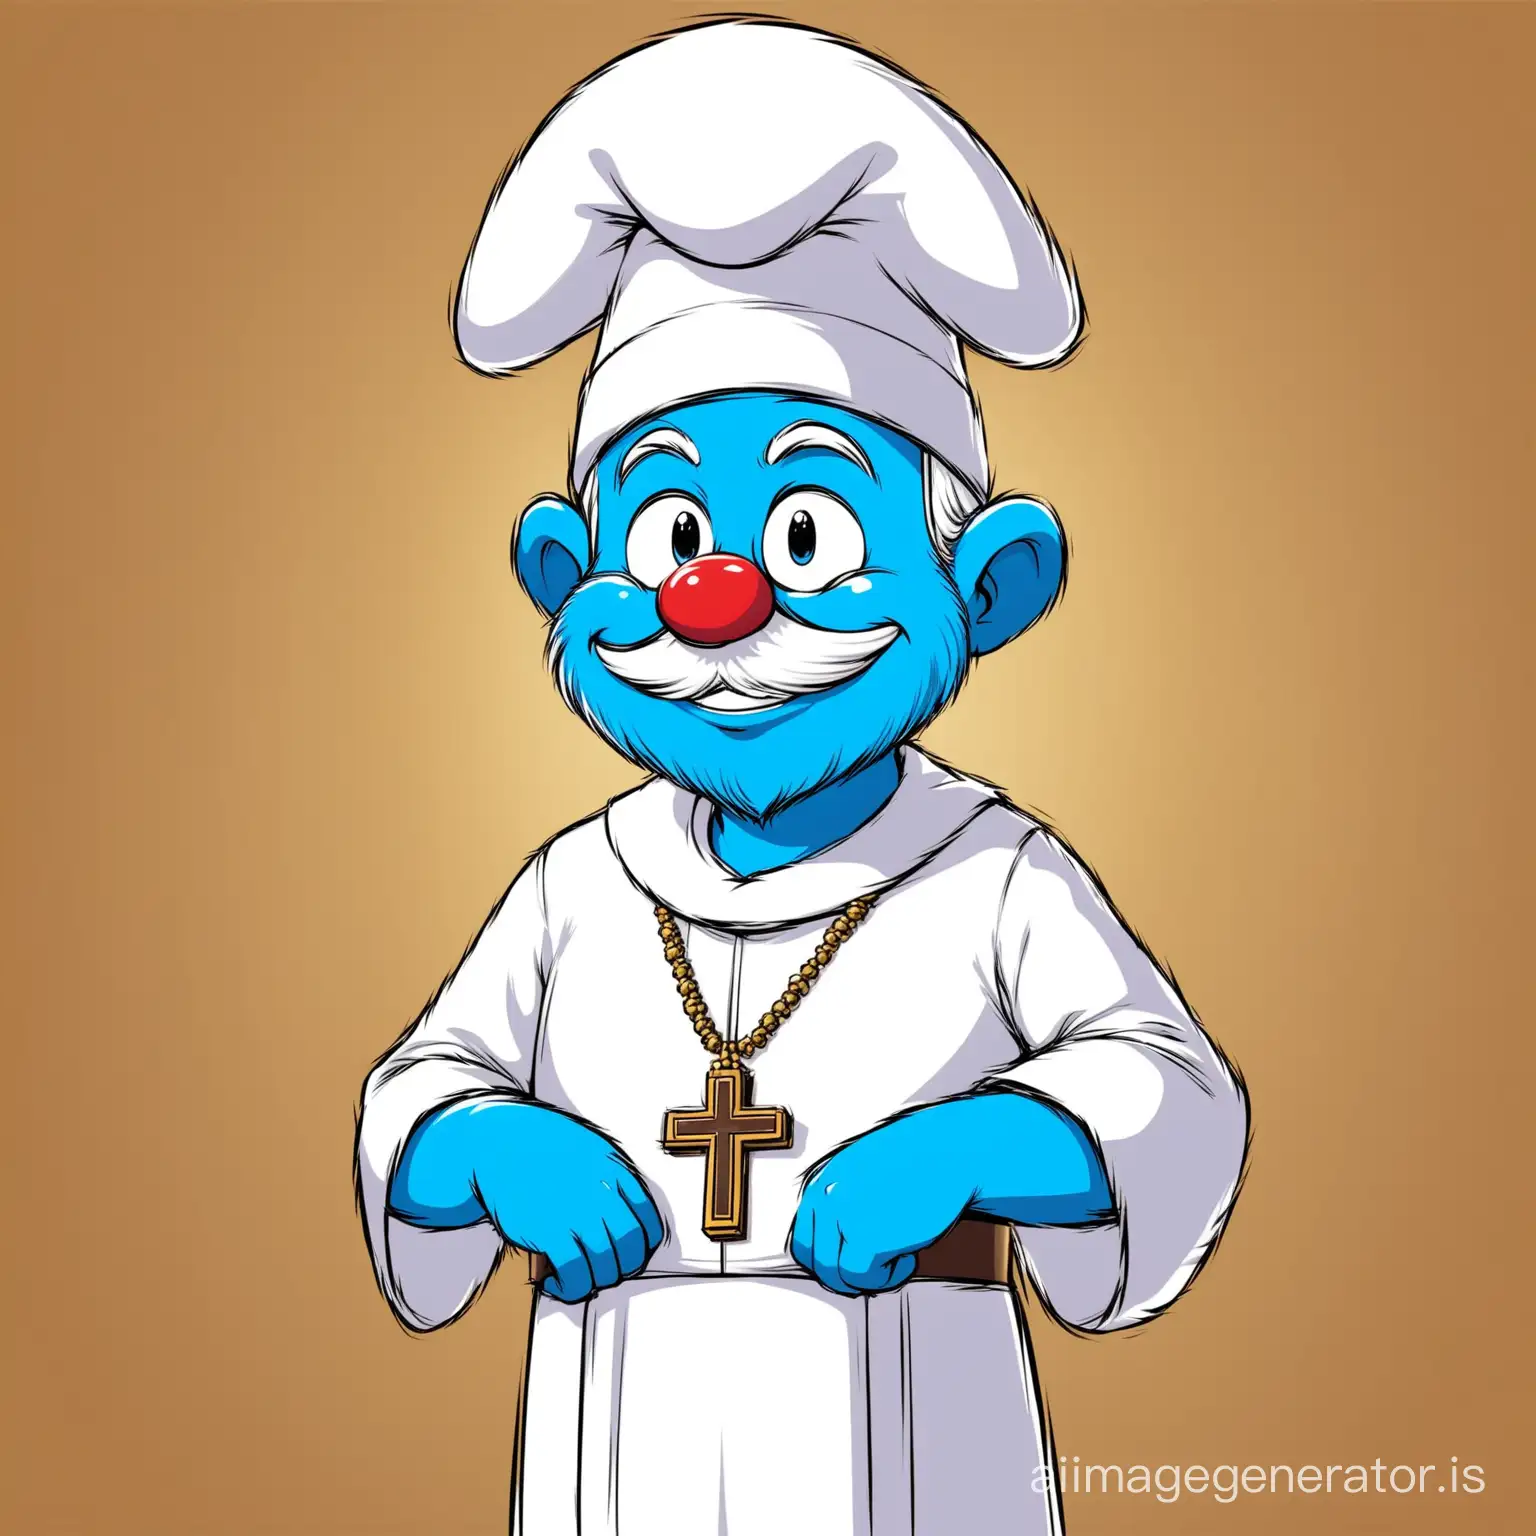 Papa-Smurf-as-a-Priest-Figure